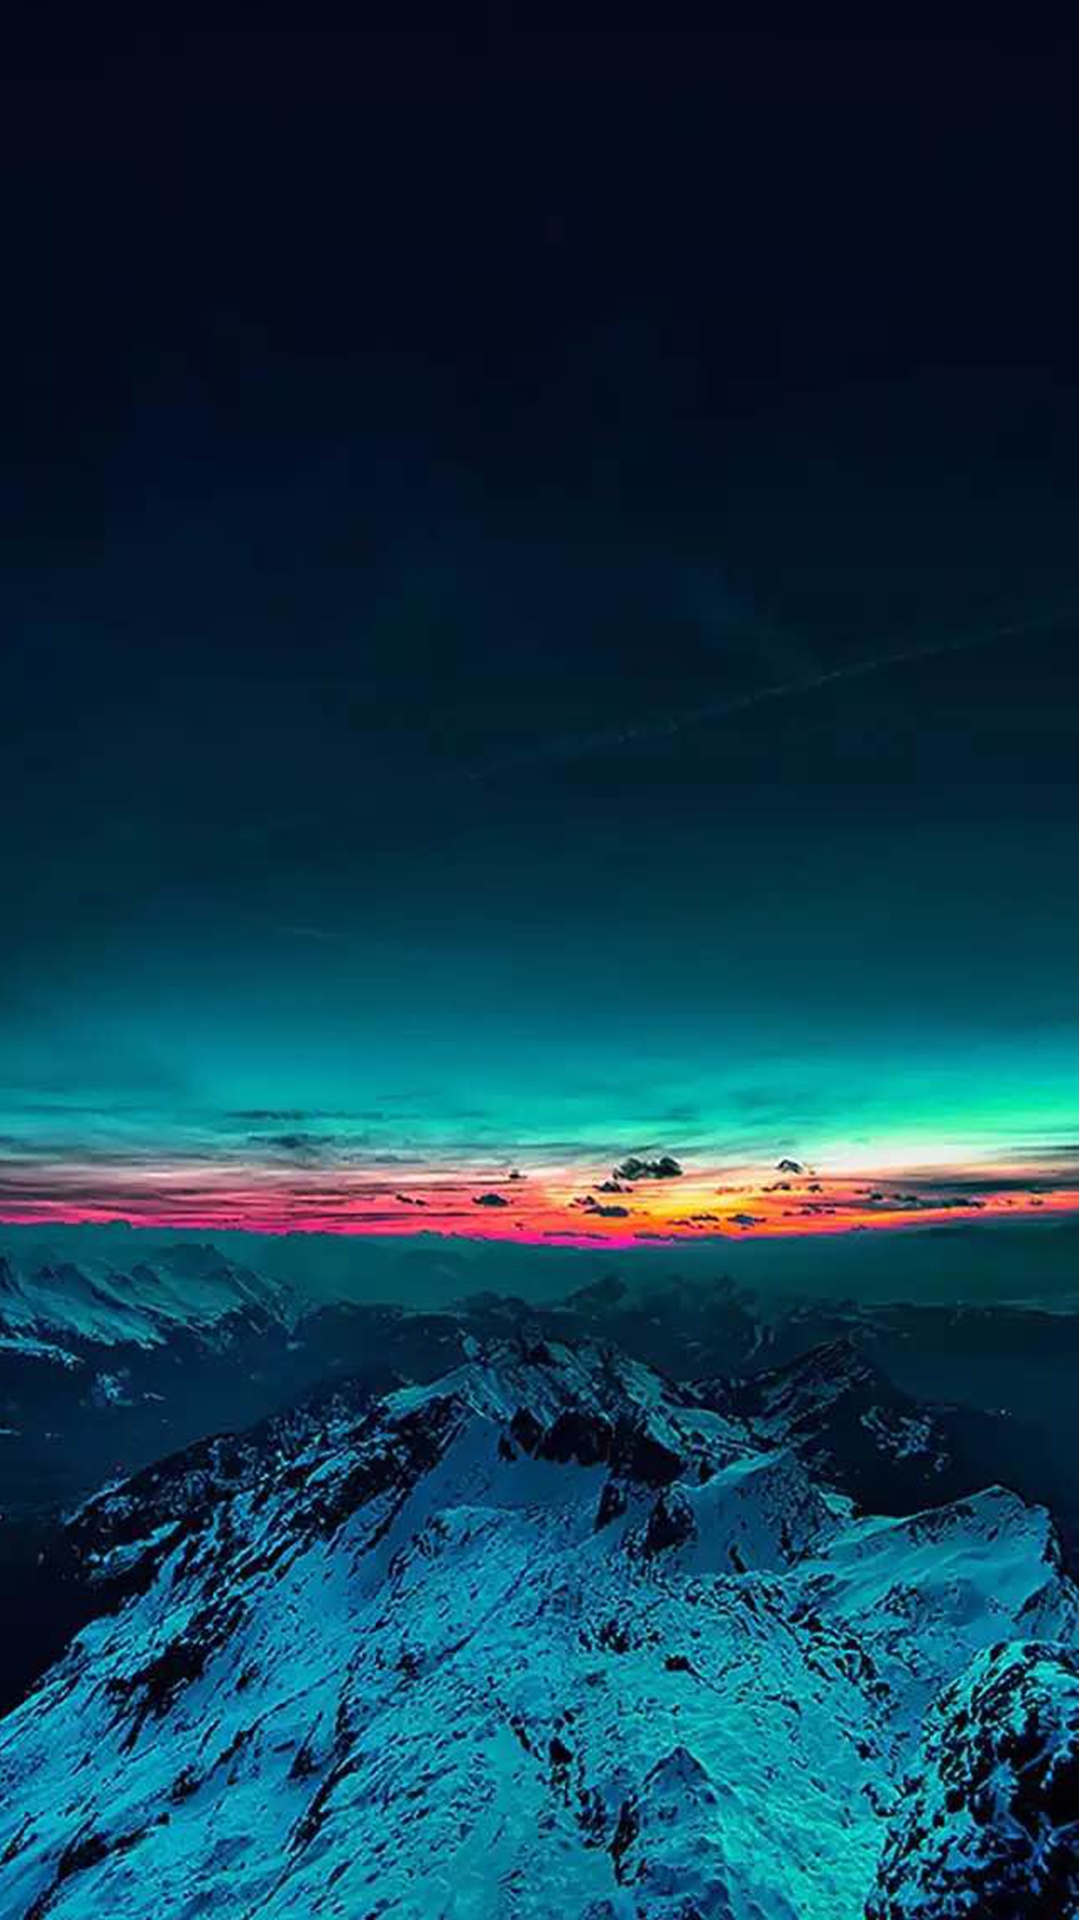 Sky On Fire Mountain Range Sunset iPhone Wallpaper